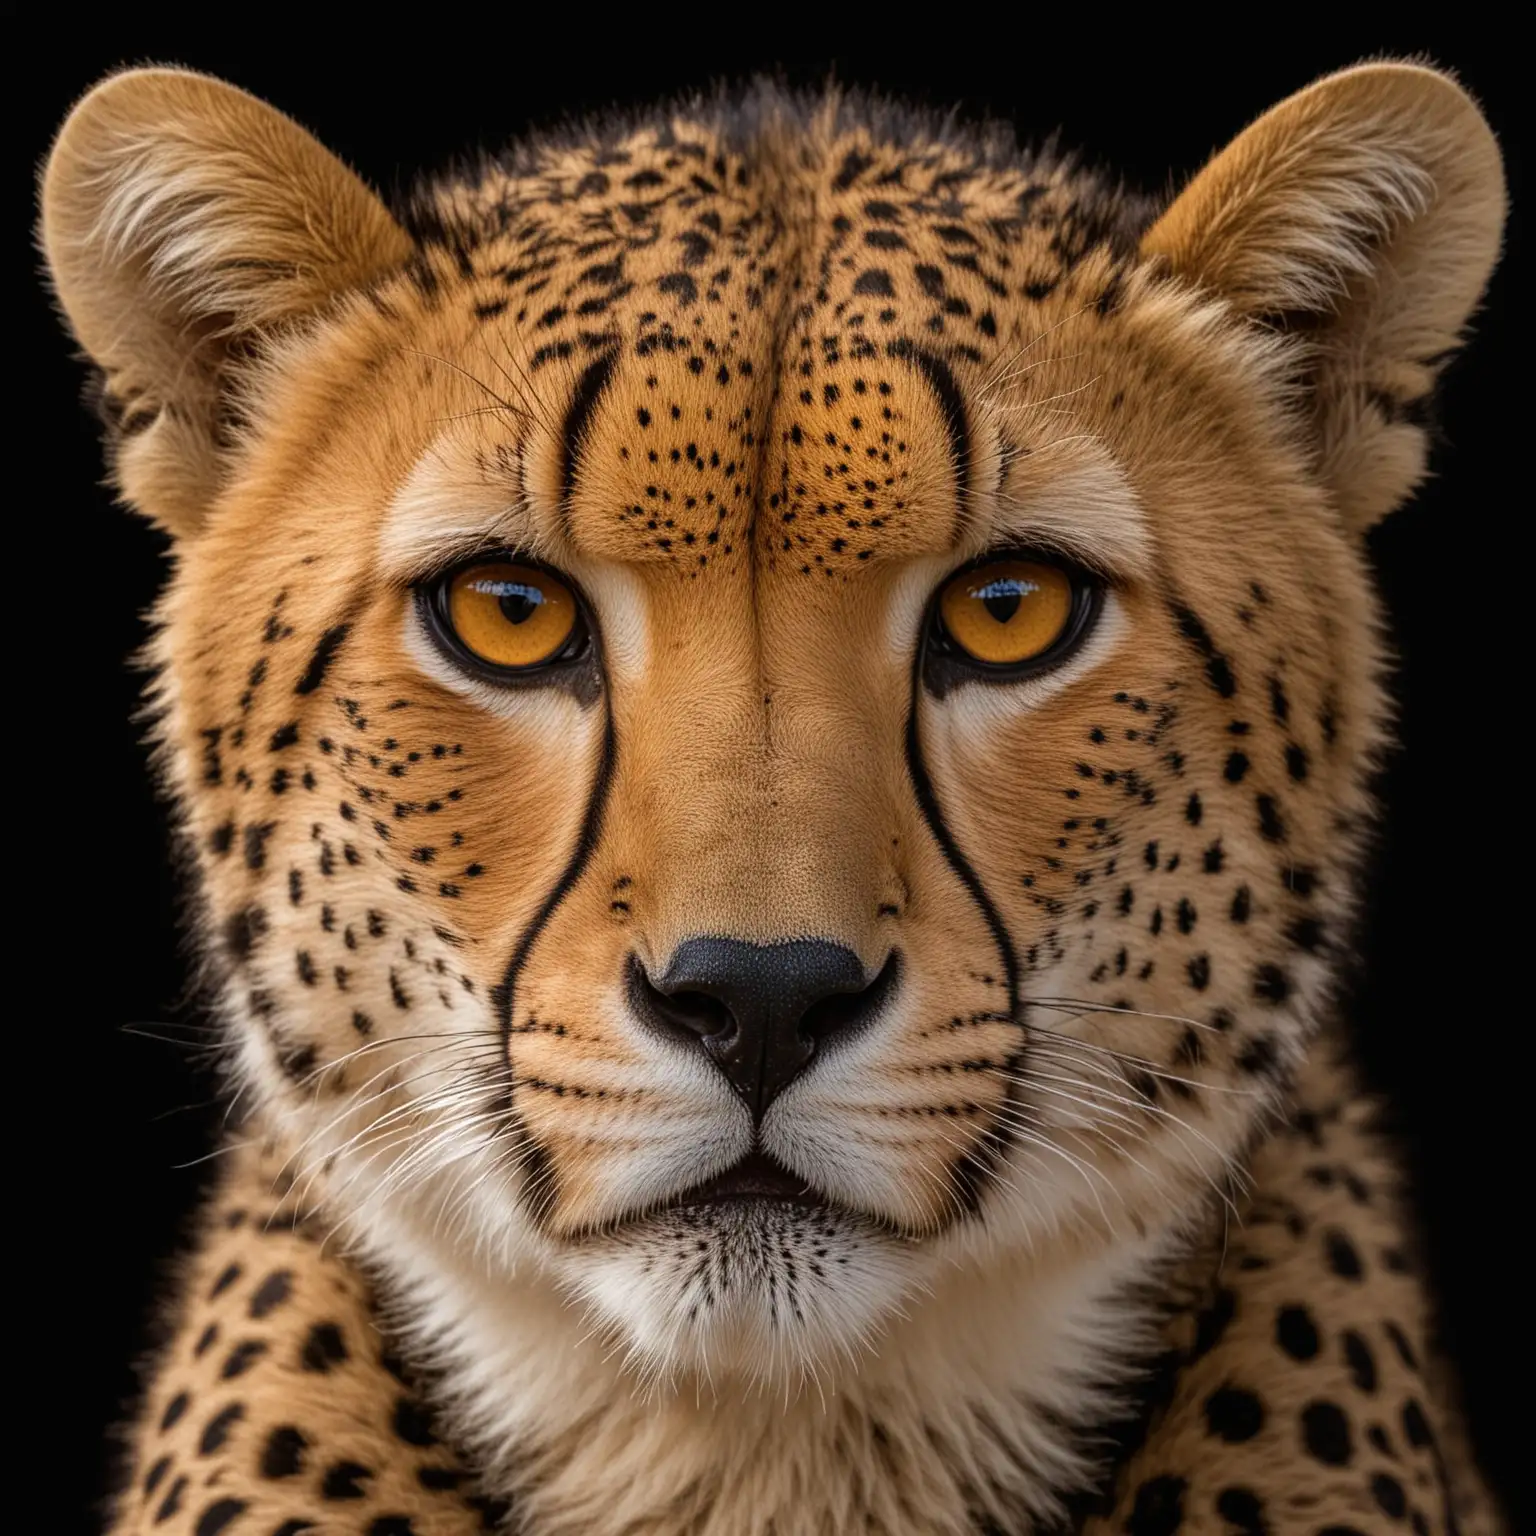 cheetah up close full face image black background